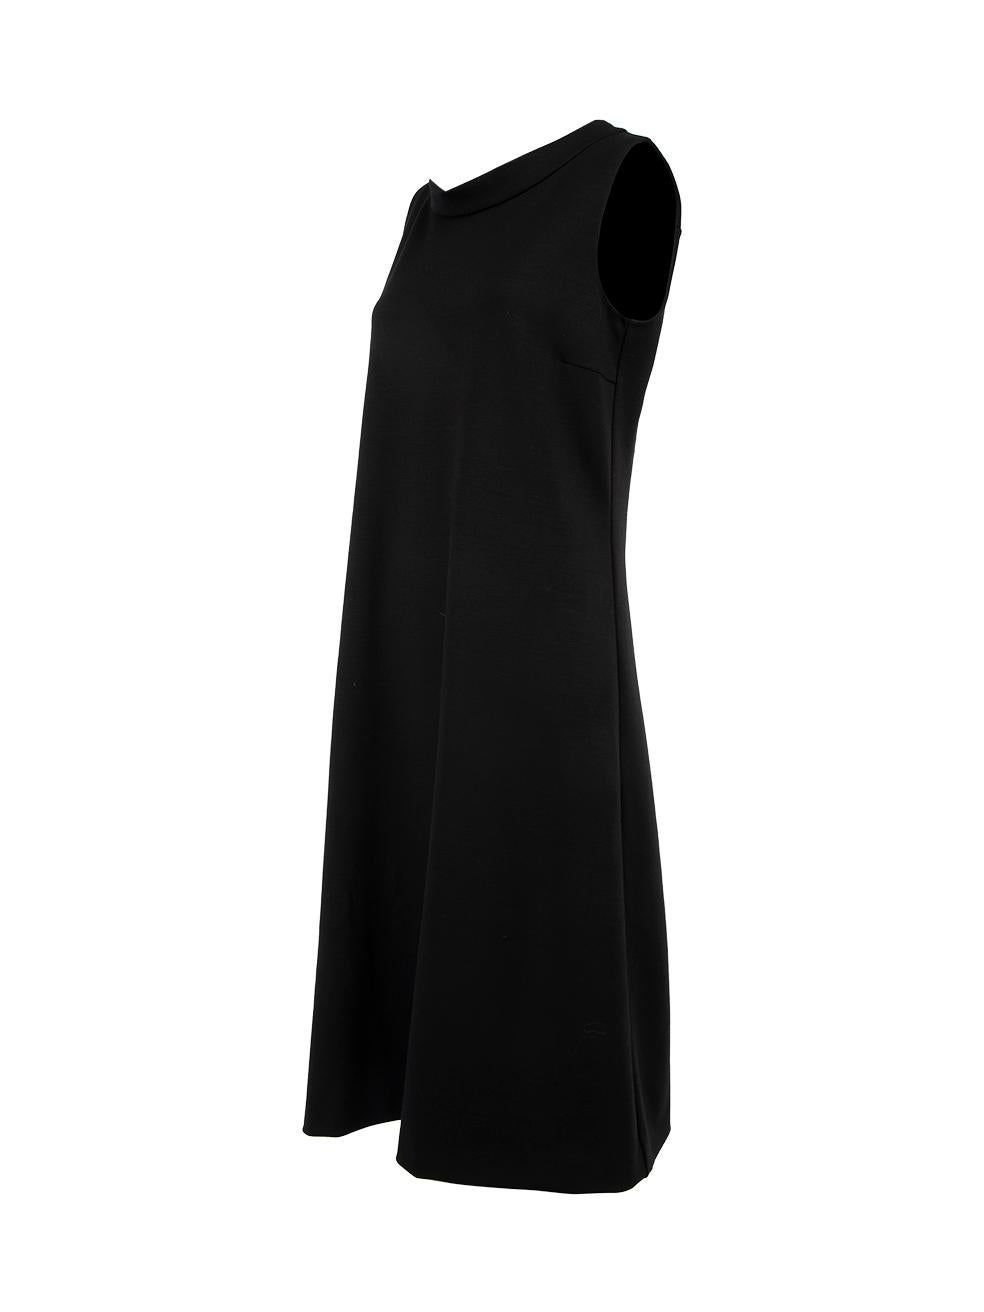 Women's Yves Saint Laurent Black Autumn 2010 Wool Sleeveless Shift Midi Dress Size M For Sale